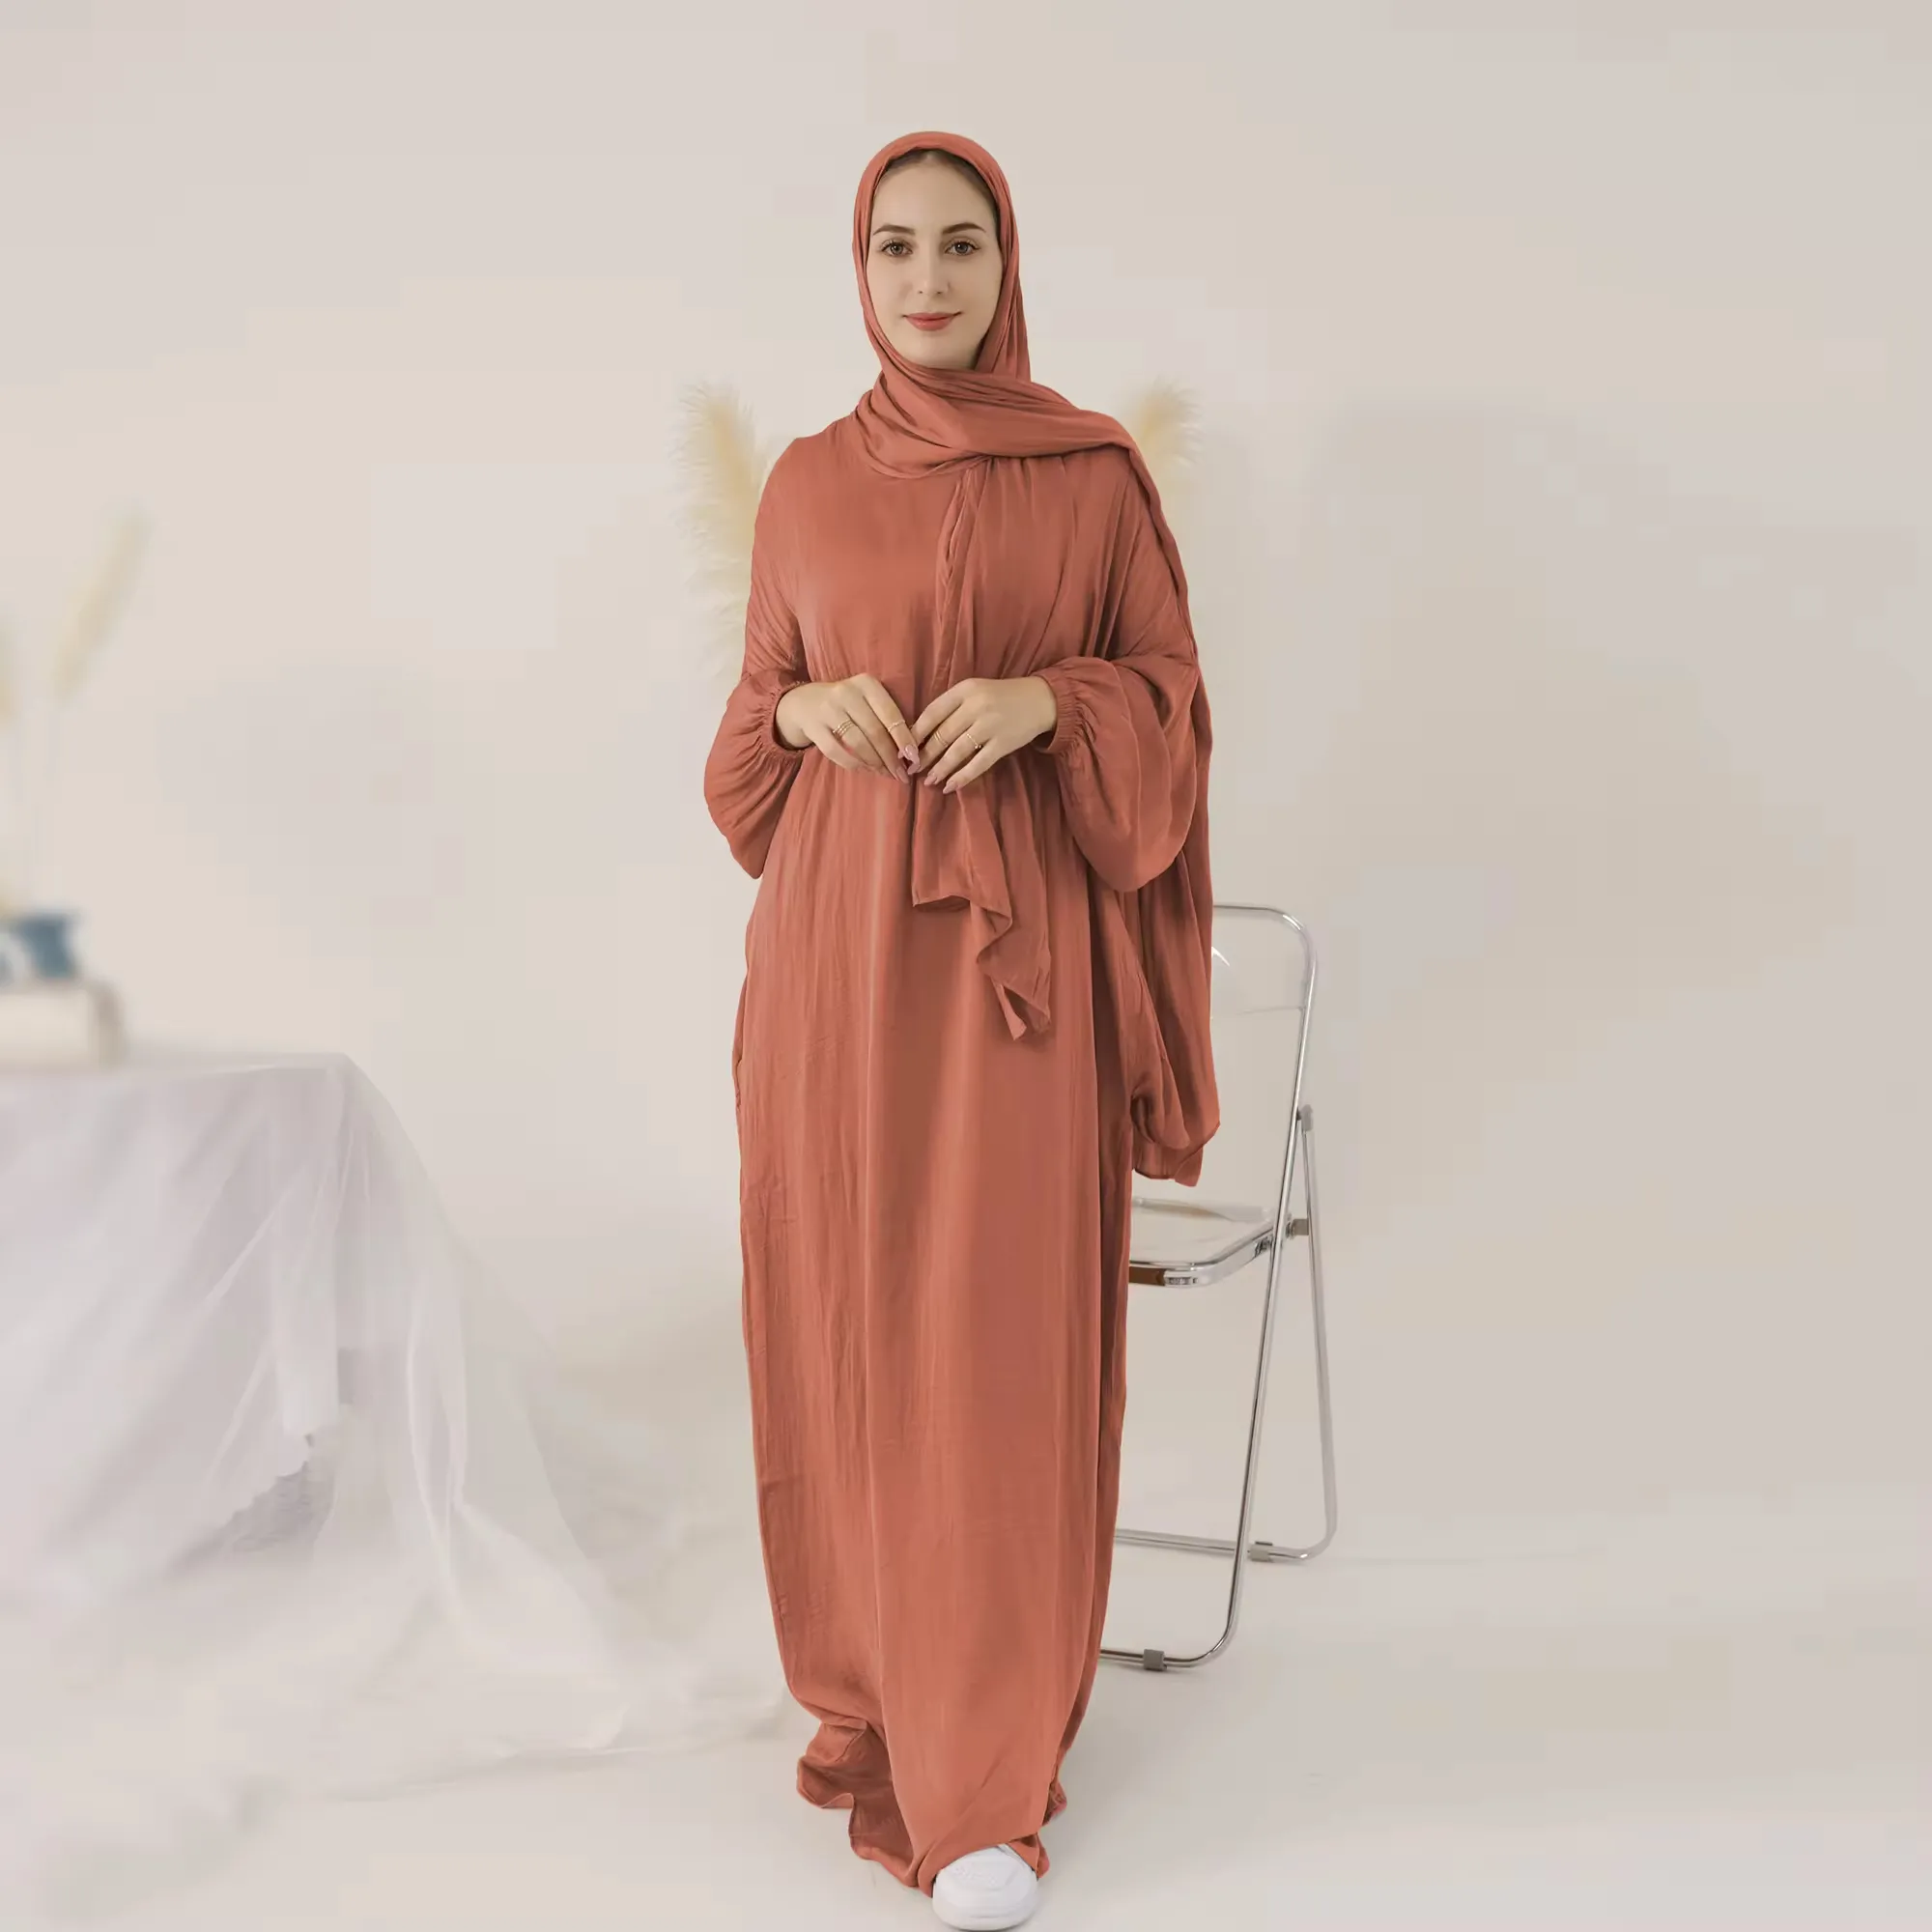 EID Hoodie Abaya Dress Attached with Hijab Islamic Clothing Modest Dresses for Muslim Women Jilbab Abaya Dubai Summer Abaya